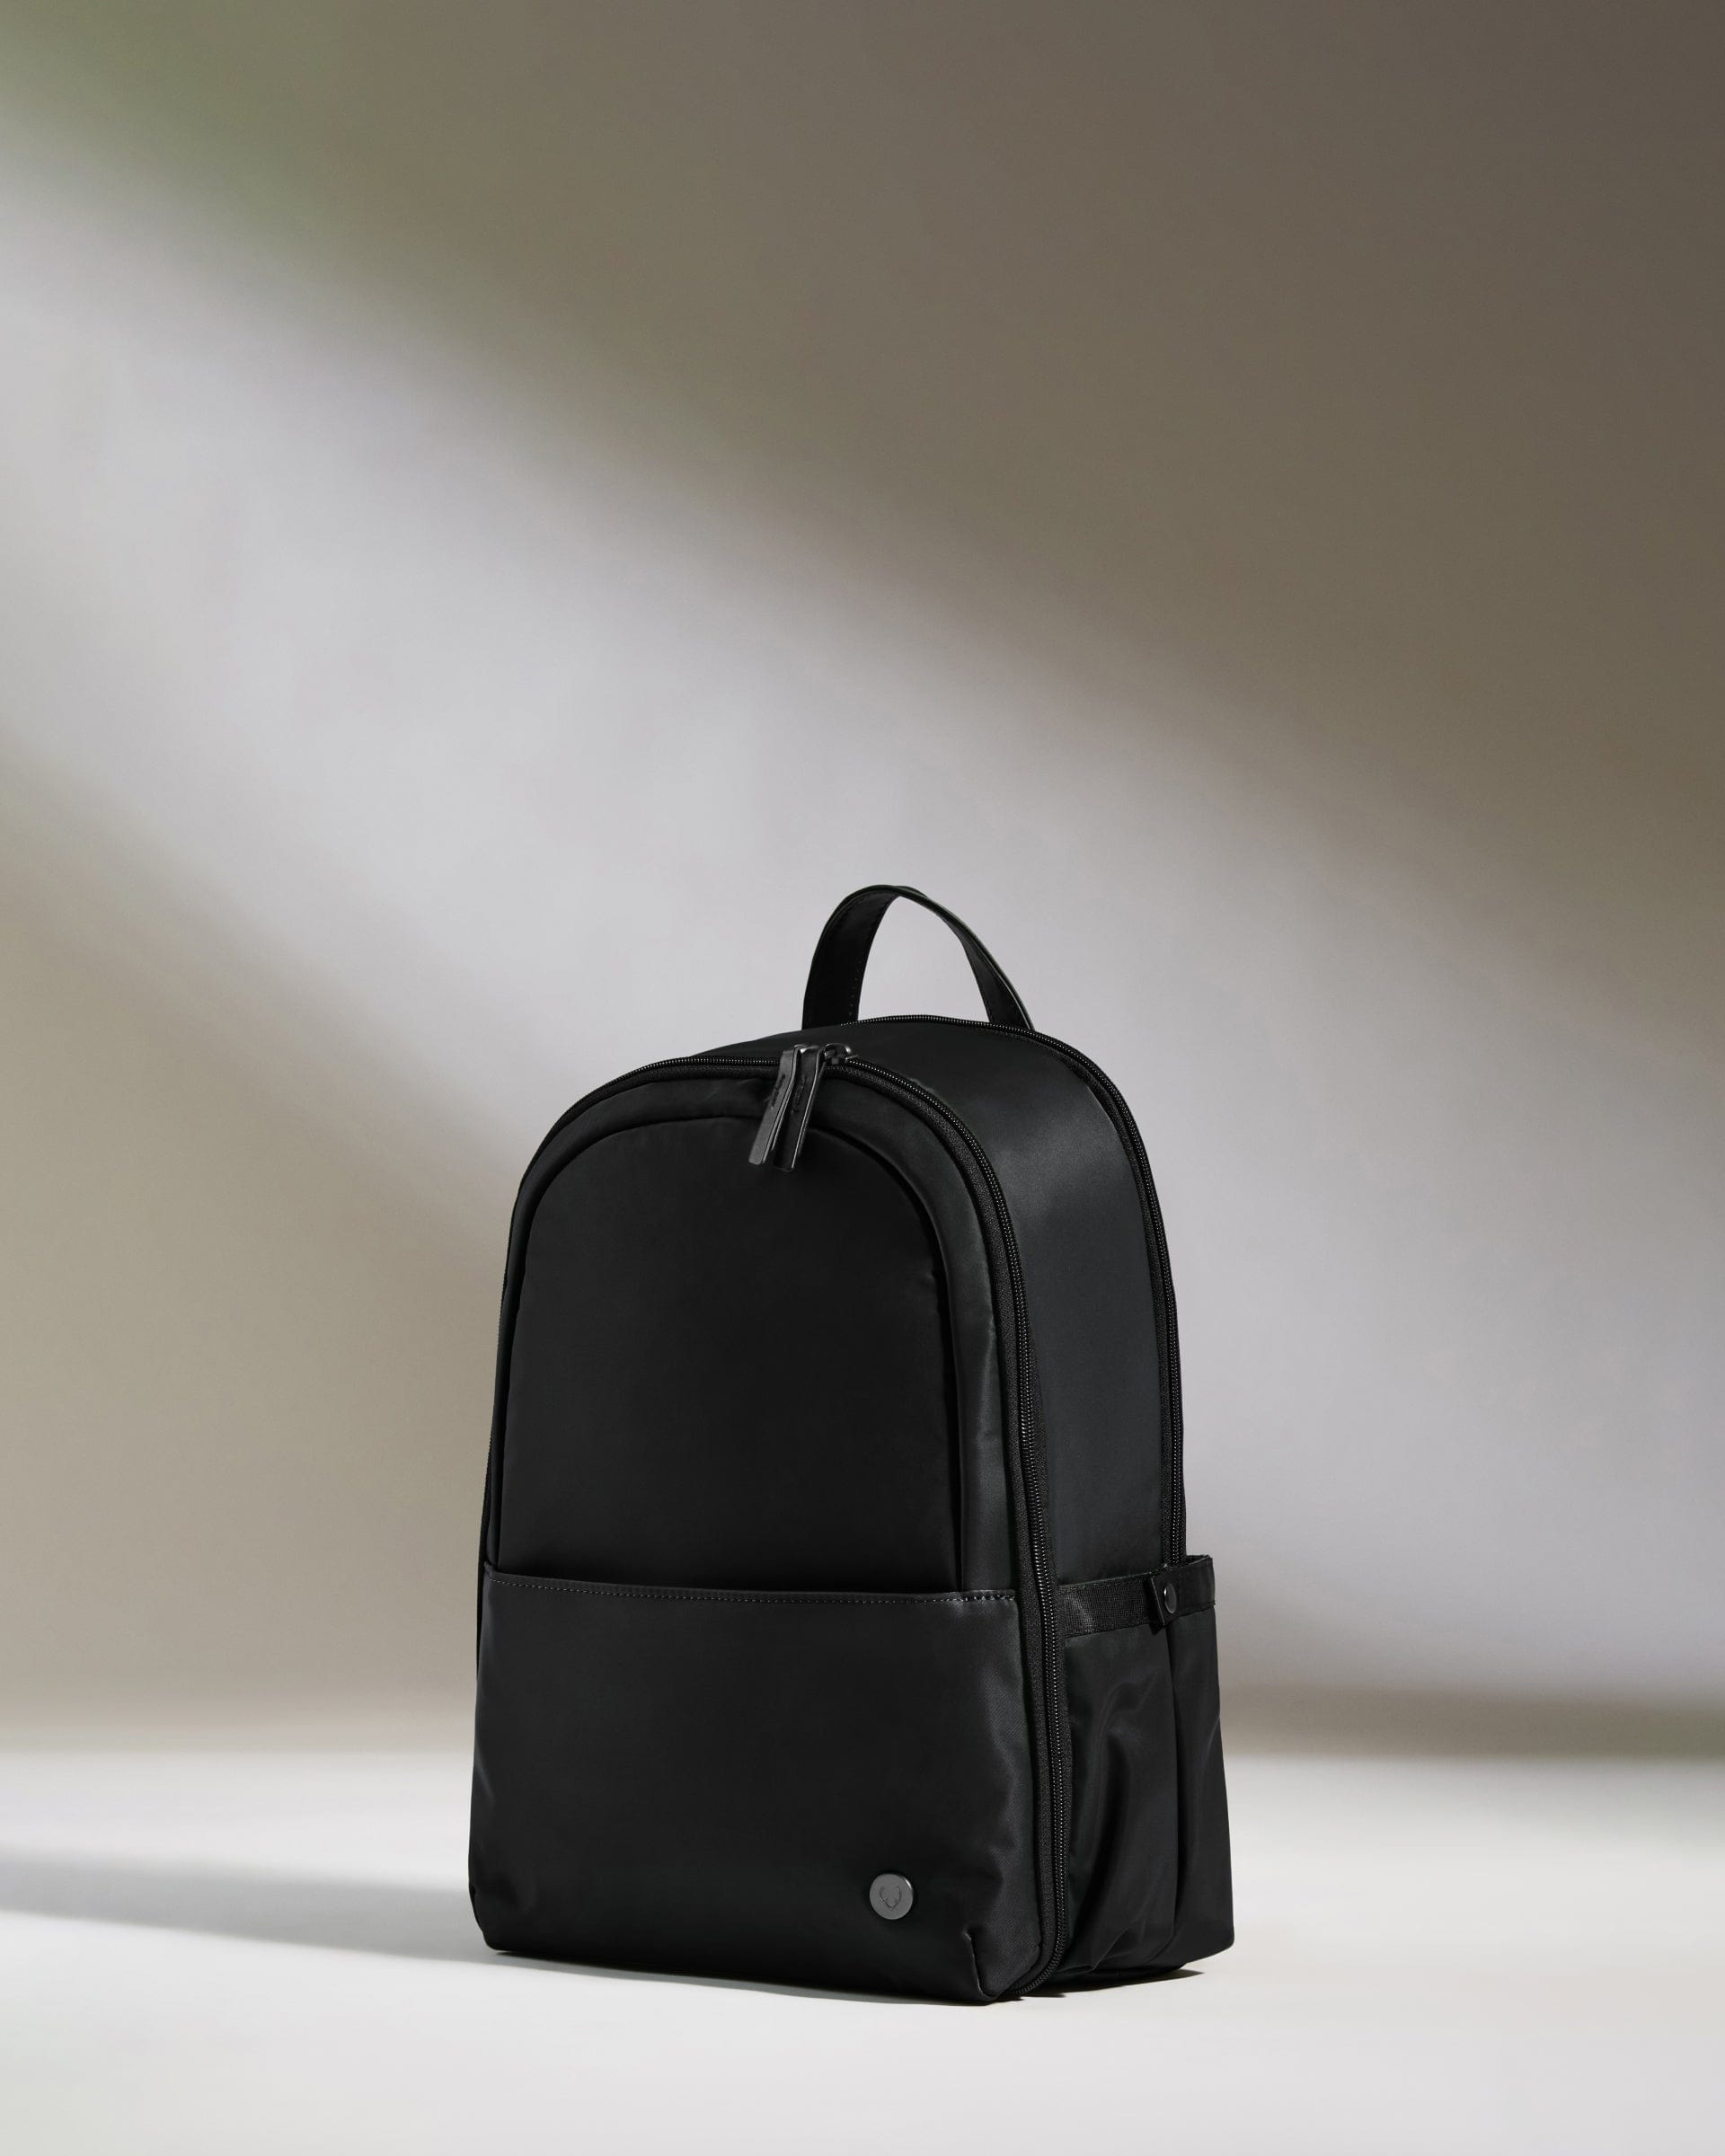 View Antler Chelsea Backpack In Black Size 17cm x 28cm x 40cm information